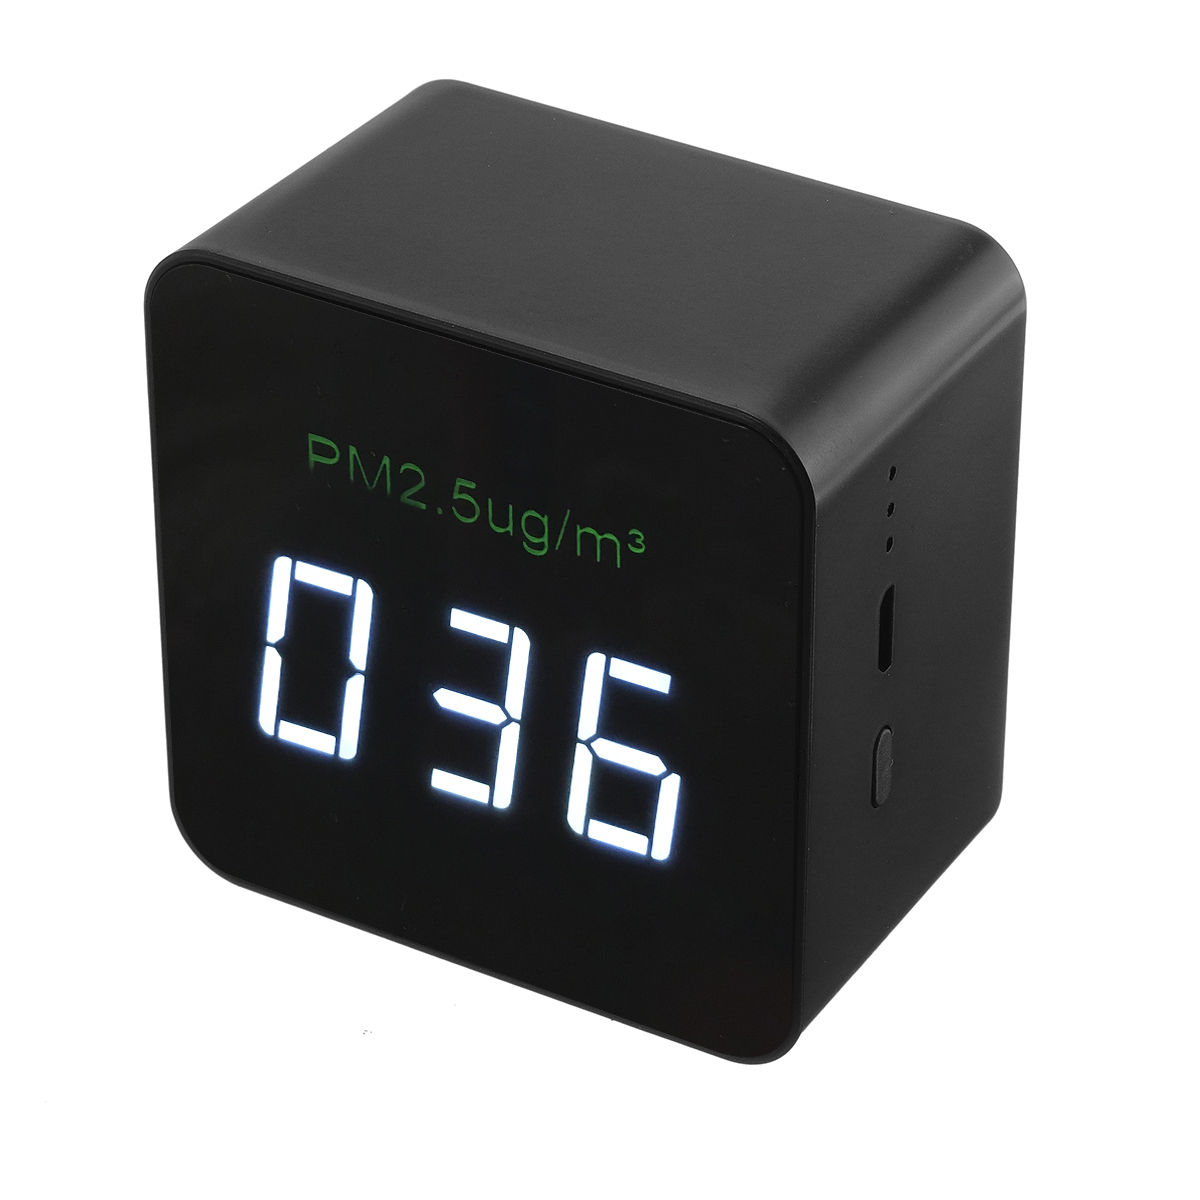 Portable-Digital-PM25-Detector-Air-Quality-Monitor-Meter-Tester-1469906-6